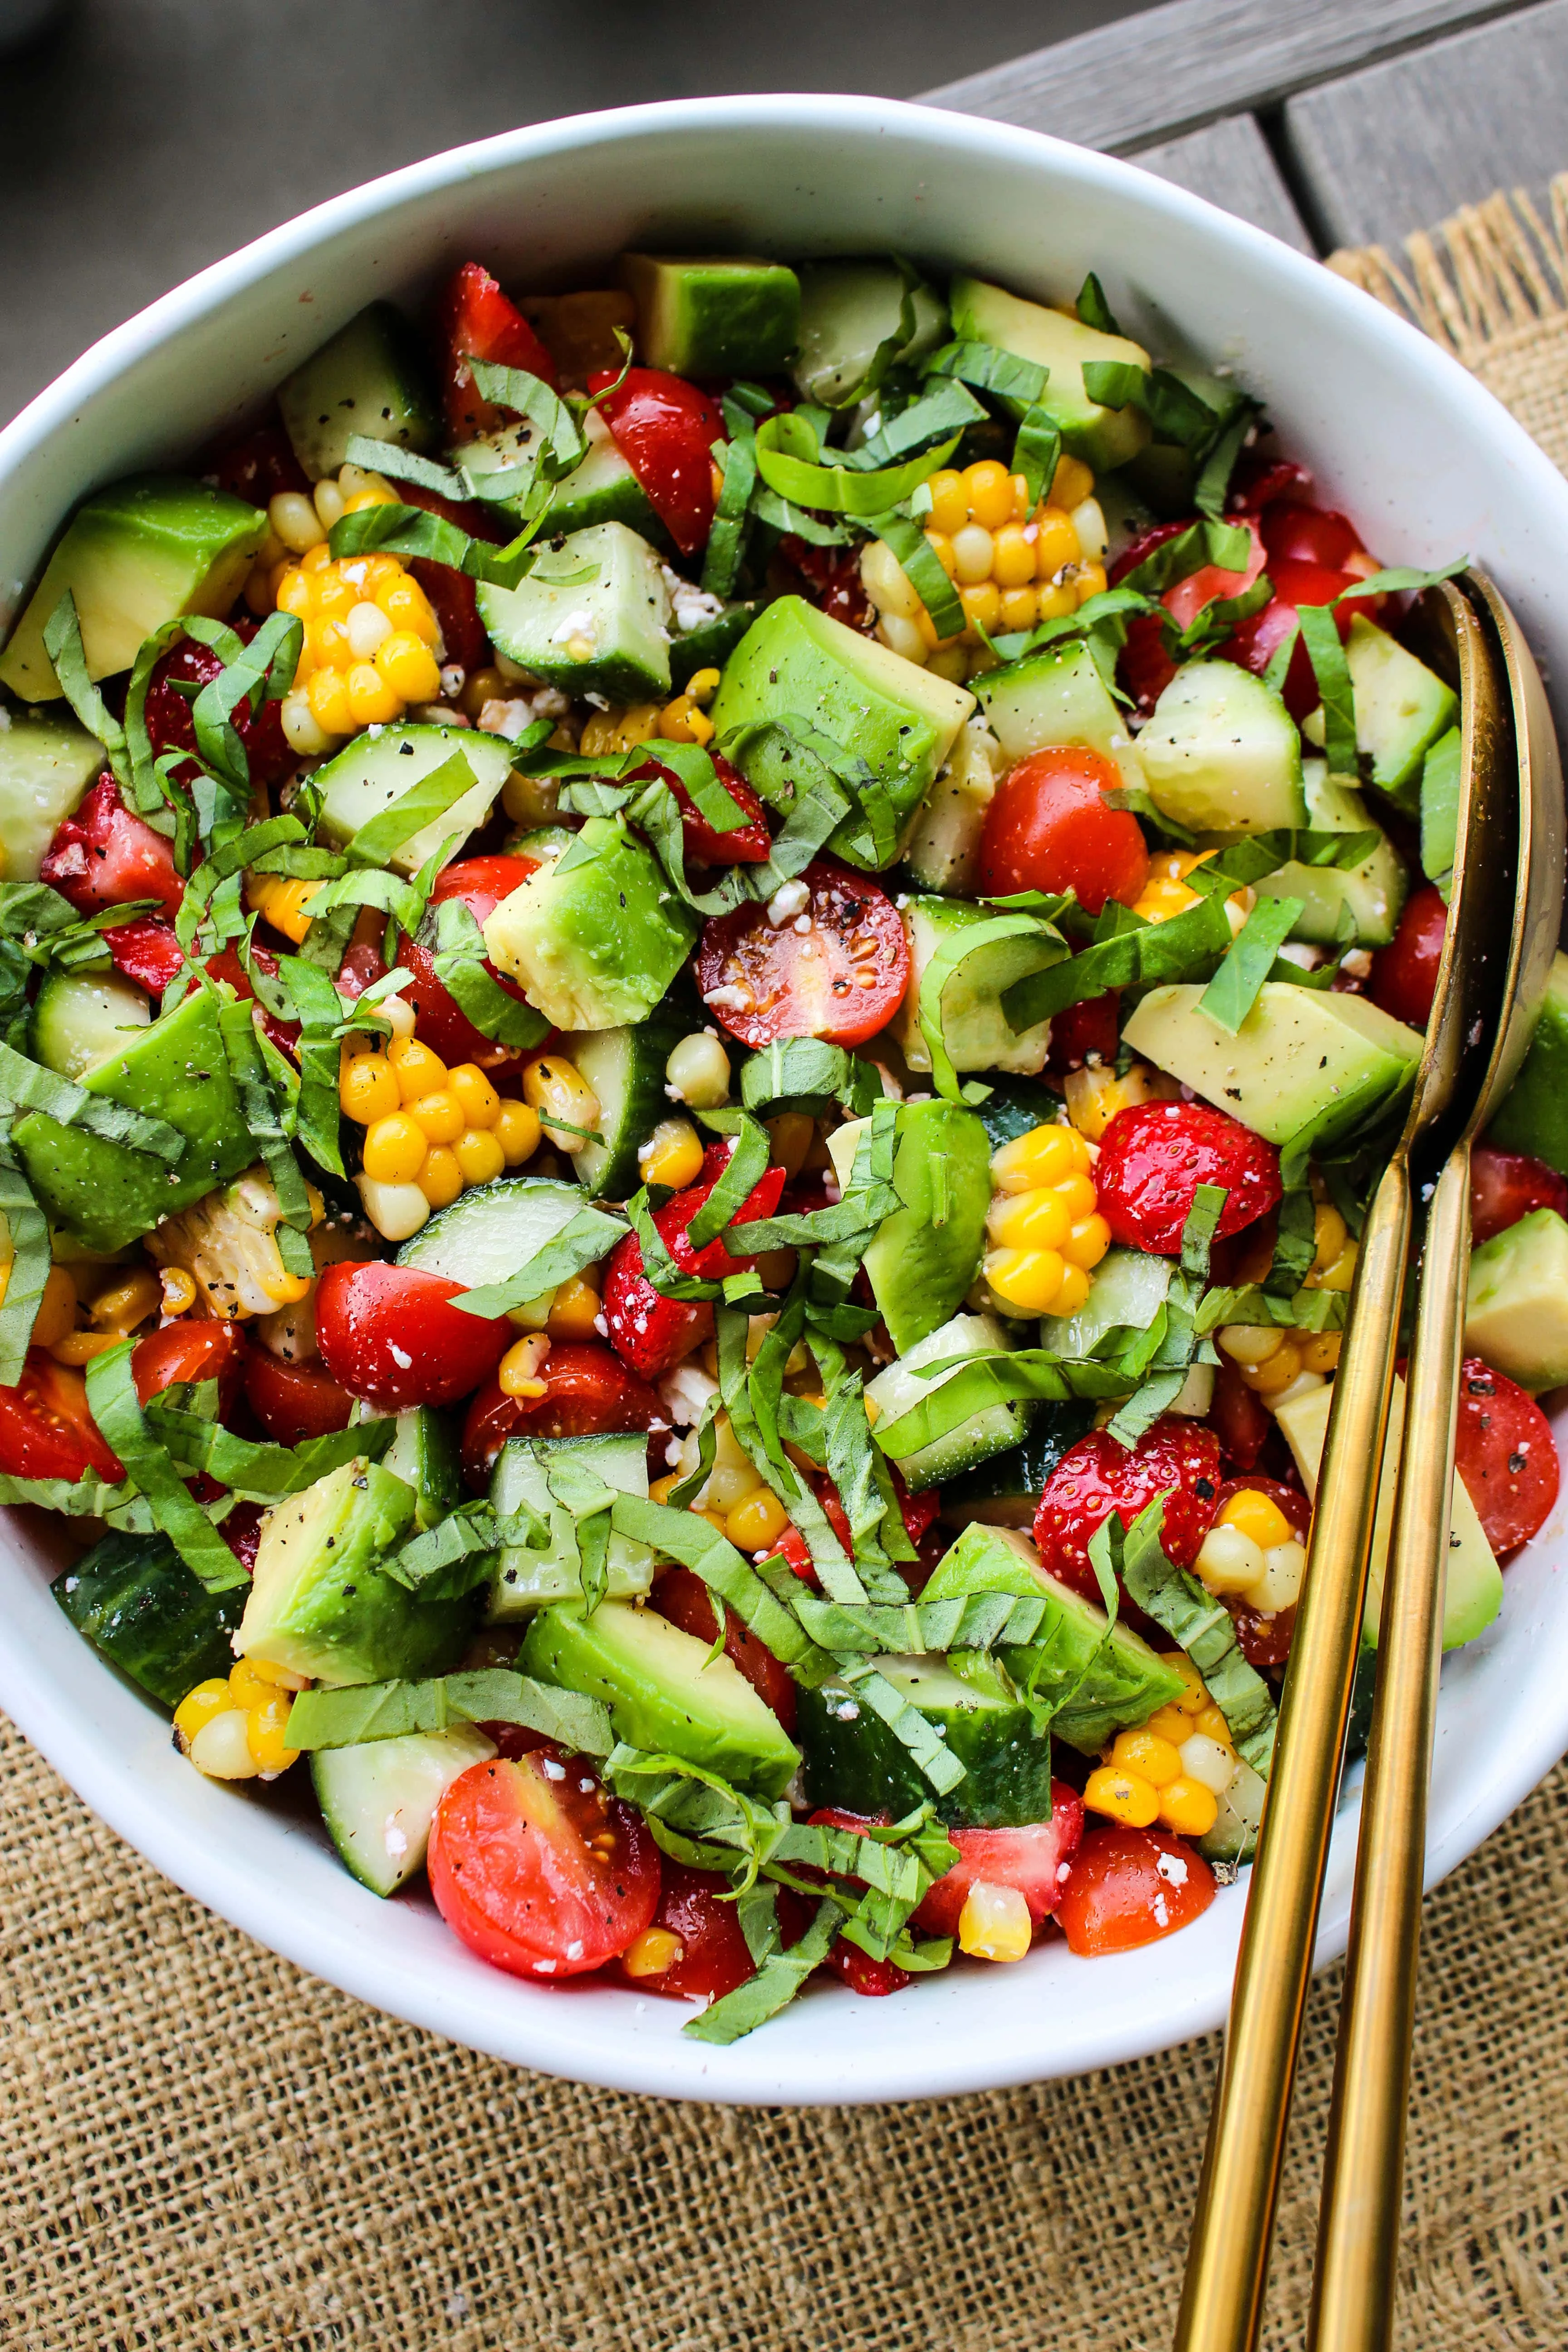 https://www.walderwellness.com/wp-content/uploads/2018/08/Summer-Salad-With-Corn-Strawberries-Avocado-Walder-Wellness-2.jpg